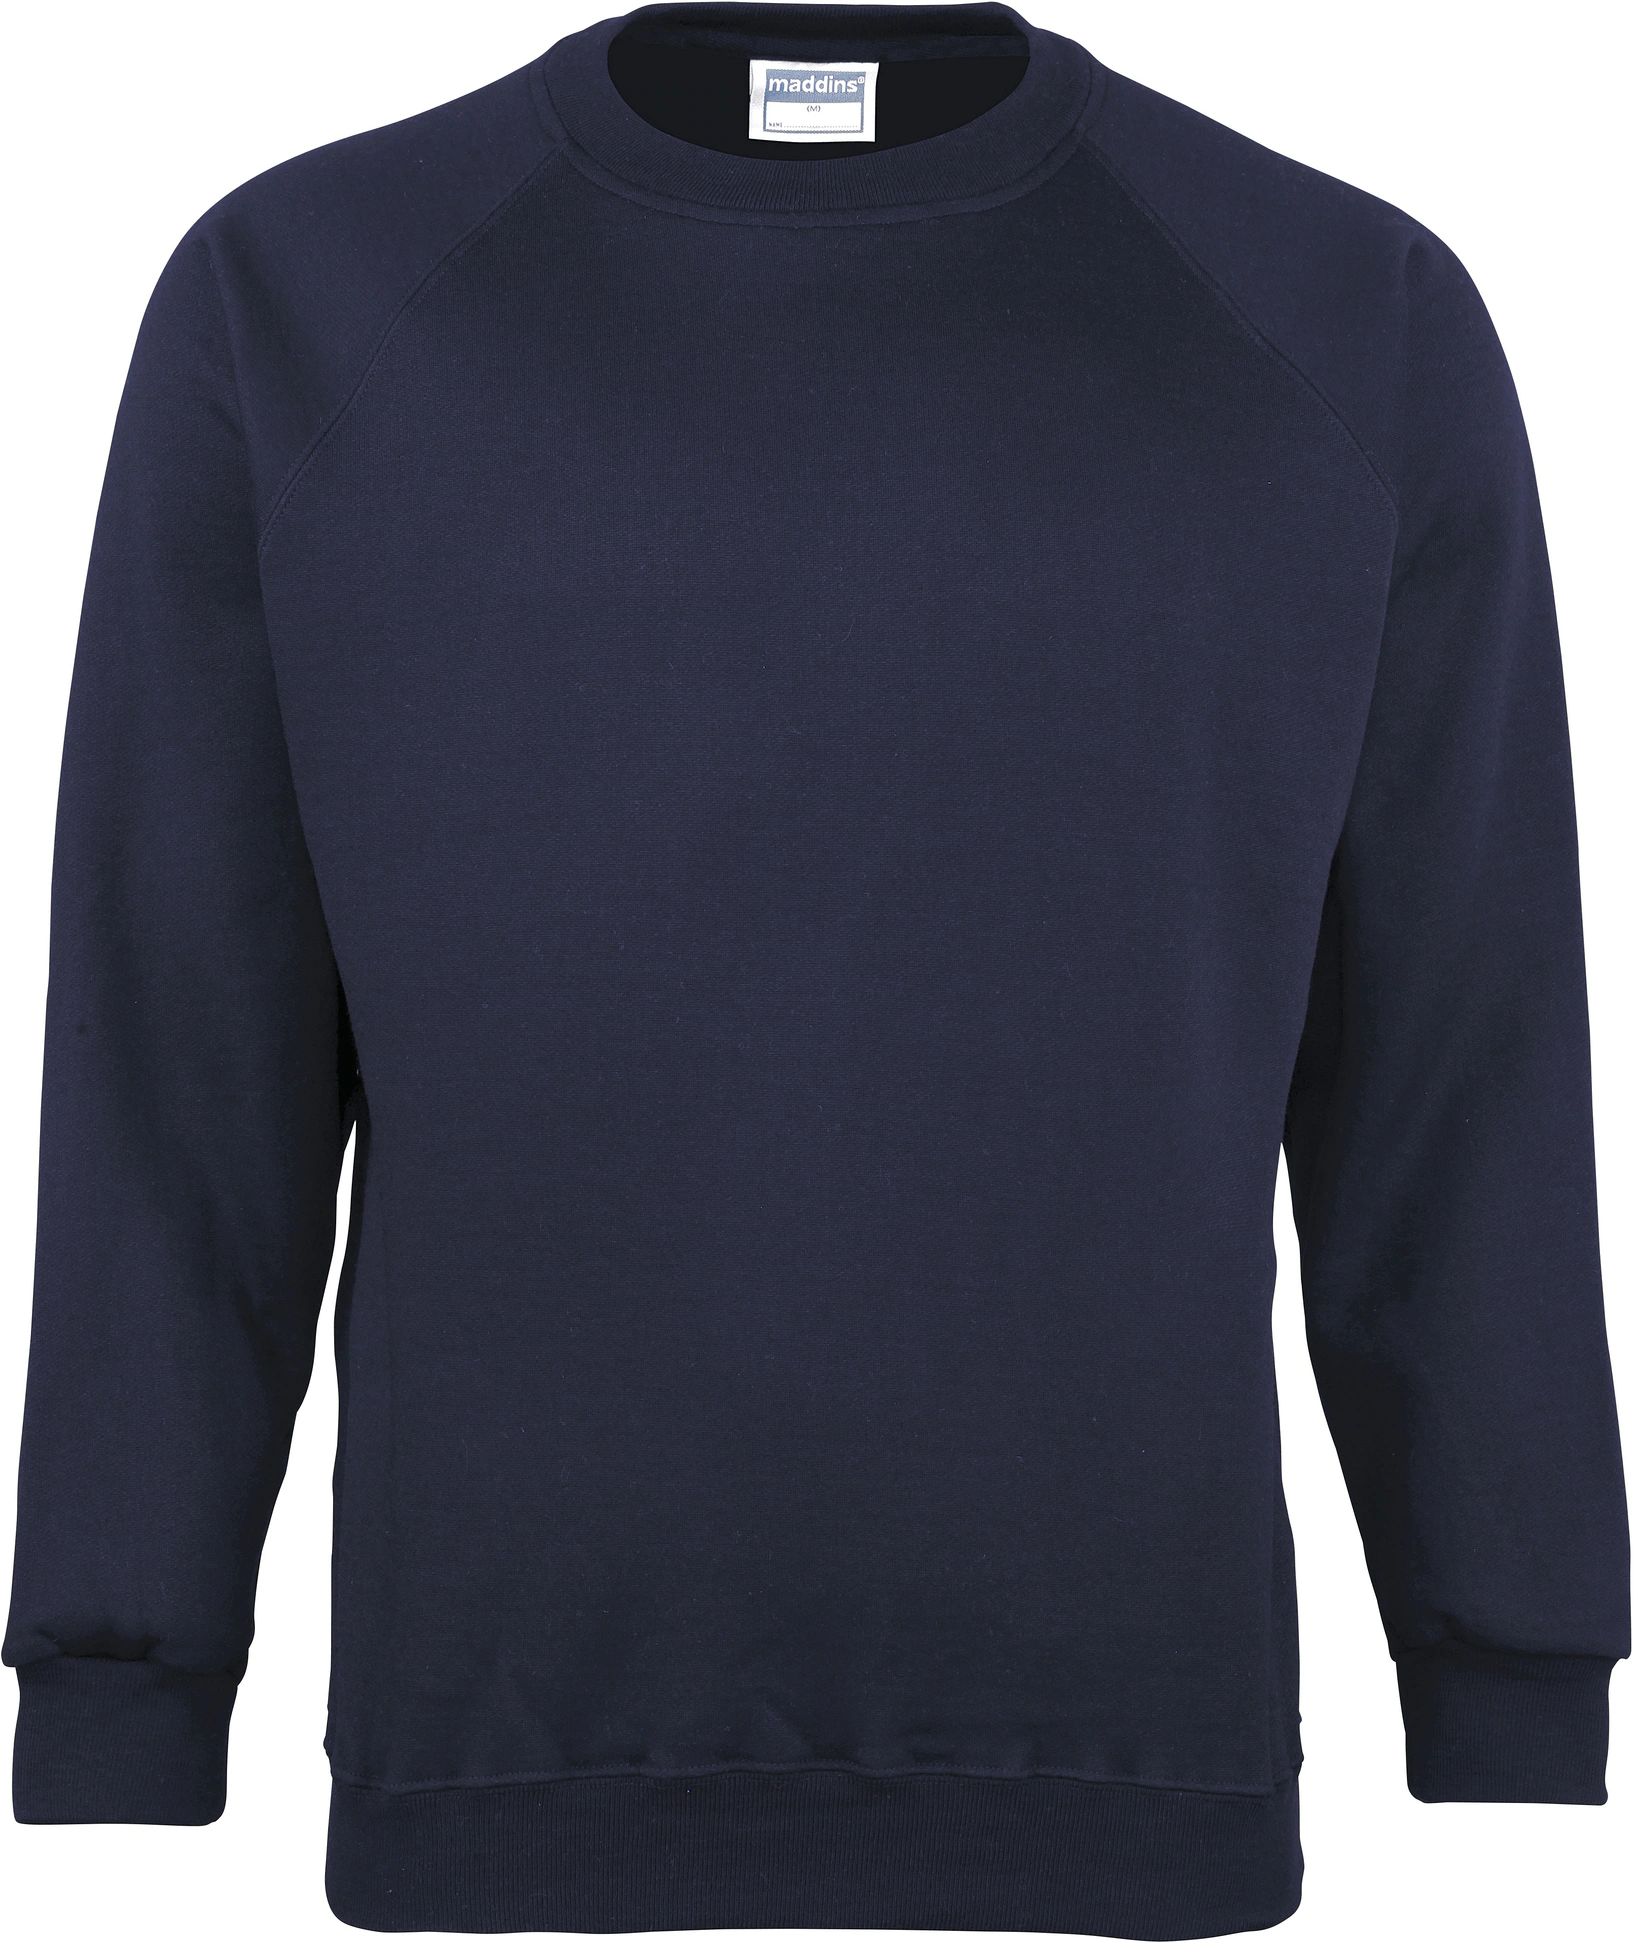 Maddins Sweatshirt Sweater With Round Neck Coloursure